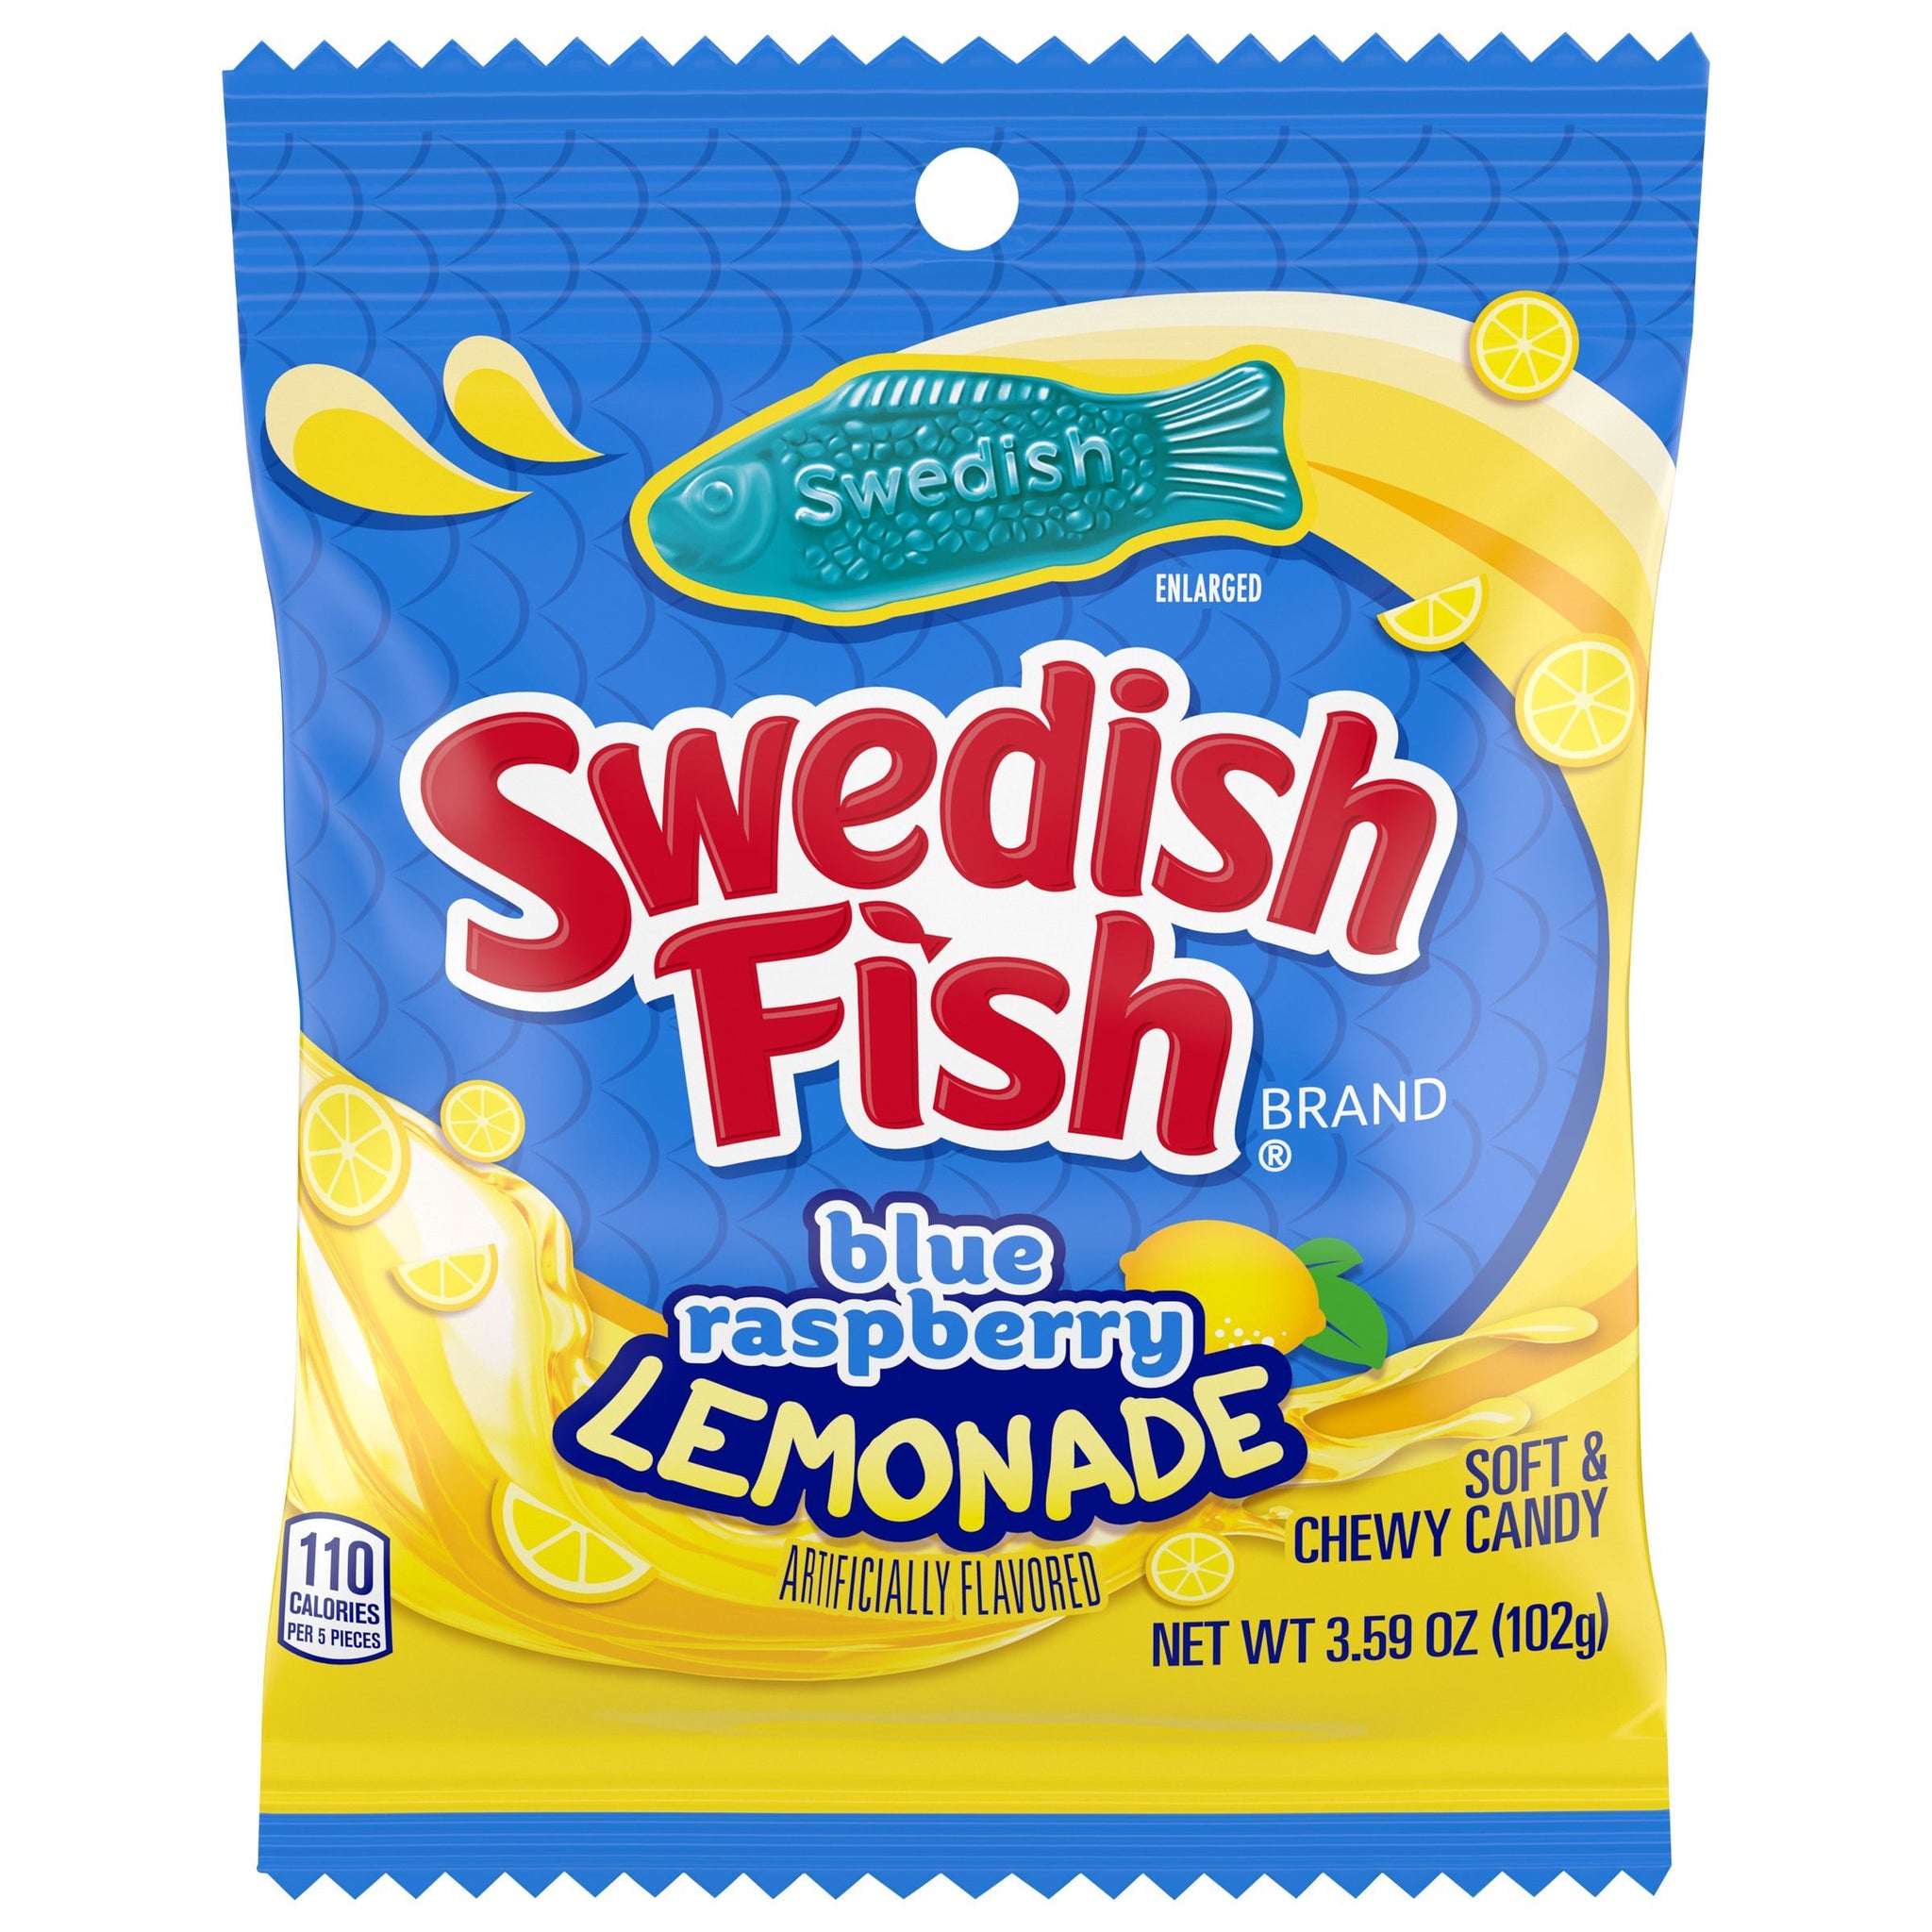 Swedish fish Blue Raspberry Lemonade, 102g